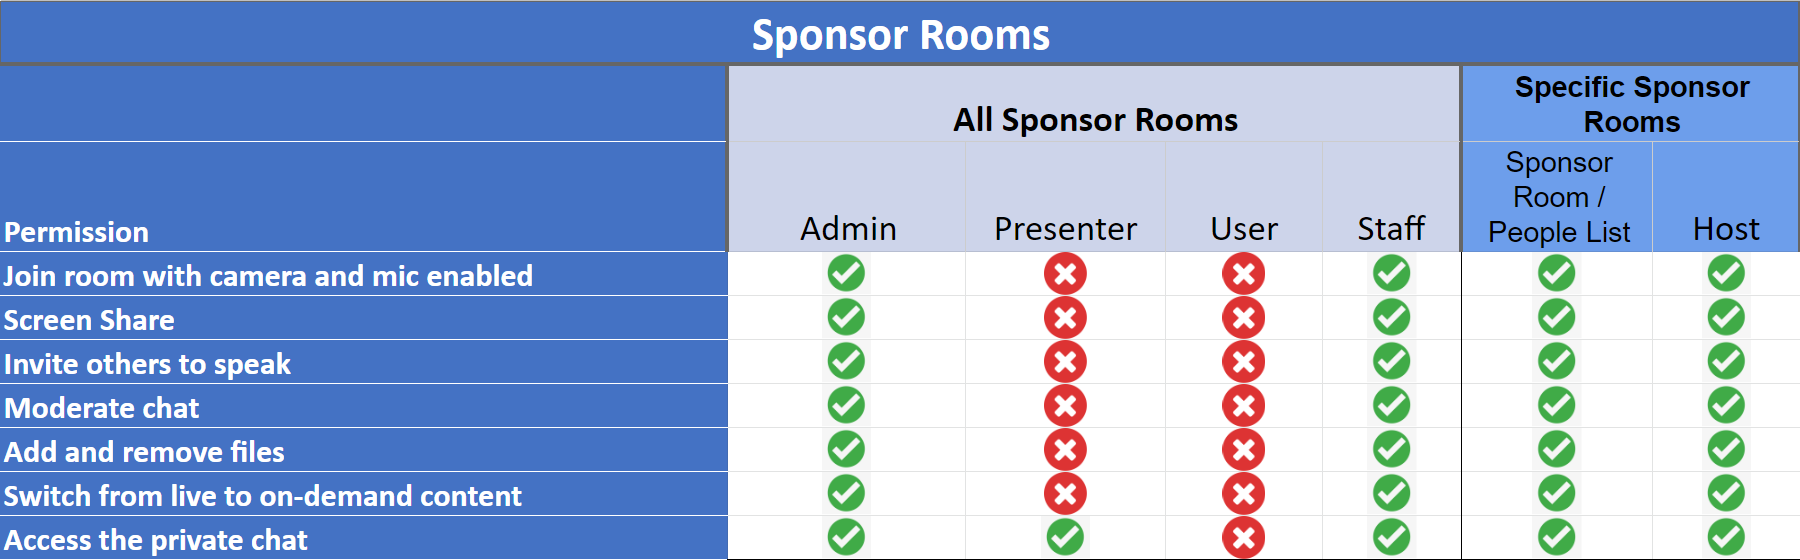 Permission for sponsor rooms